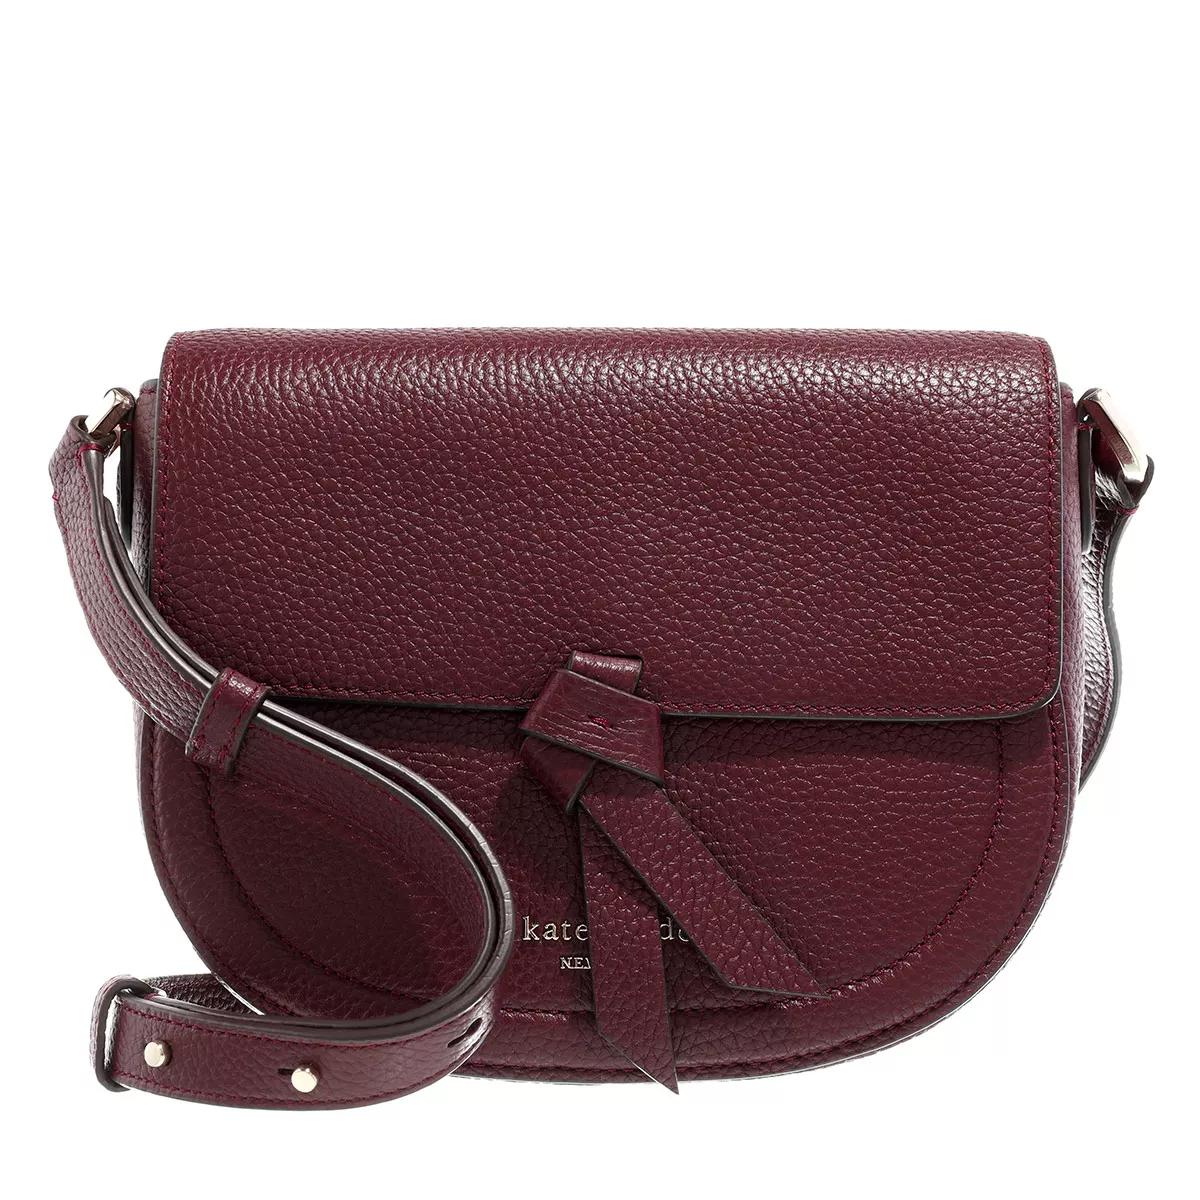 Kate Spade New York Knott Pebbled Leather Medium Saddle Bag